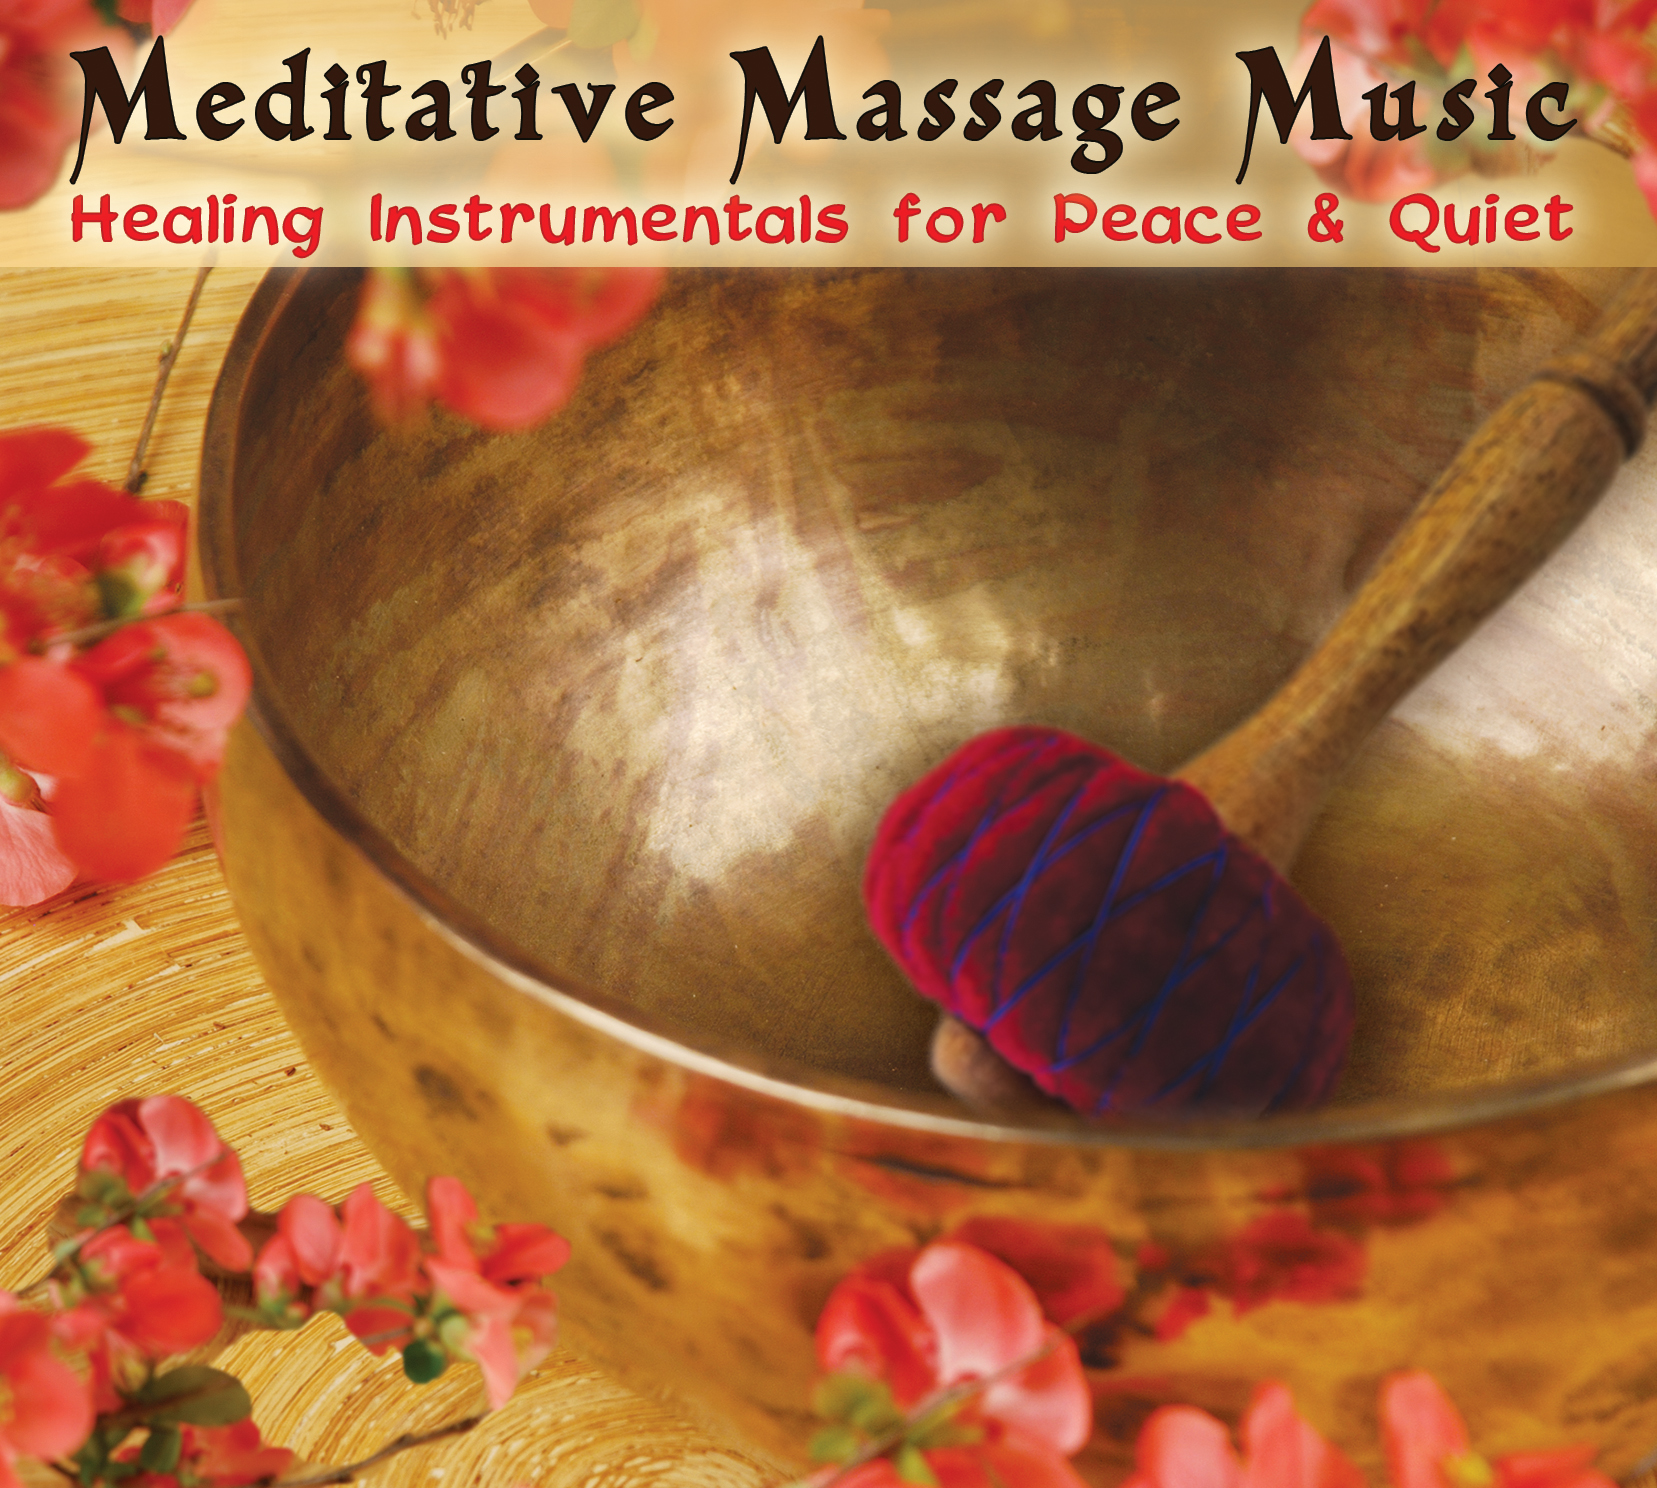 MEDITATIVE MASSAGE MUSIC: HEALING INSTRUMENTALS